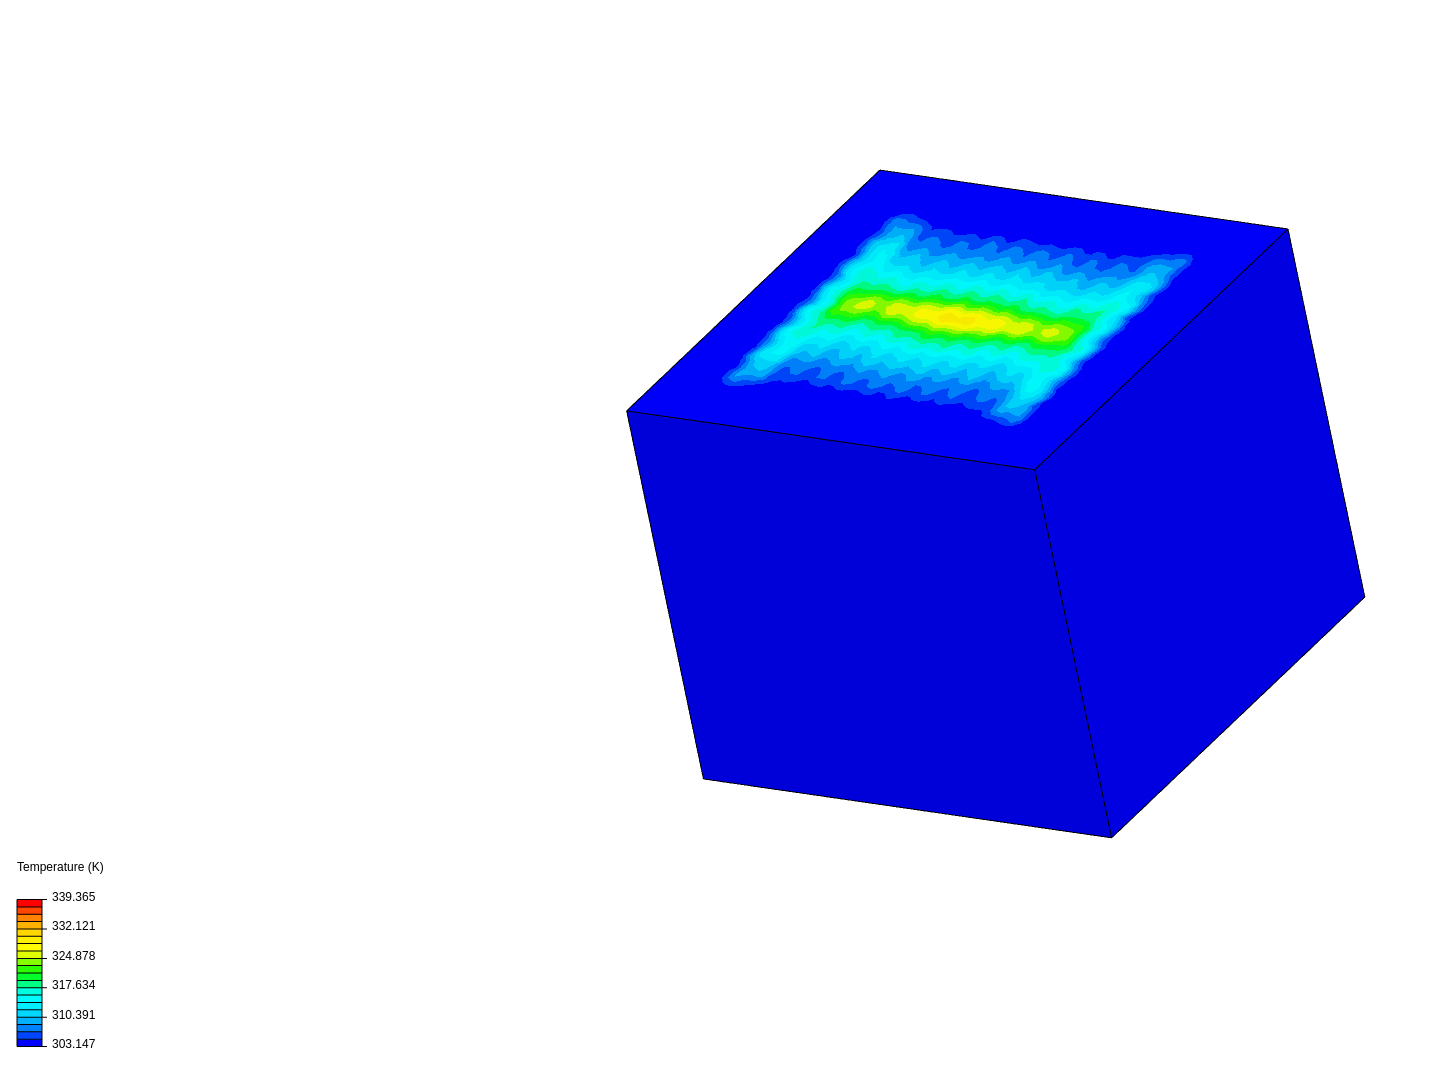 hexa 2/3 fin image